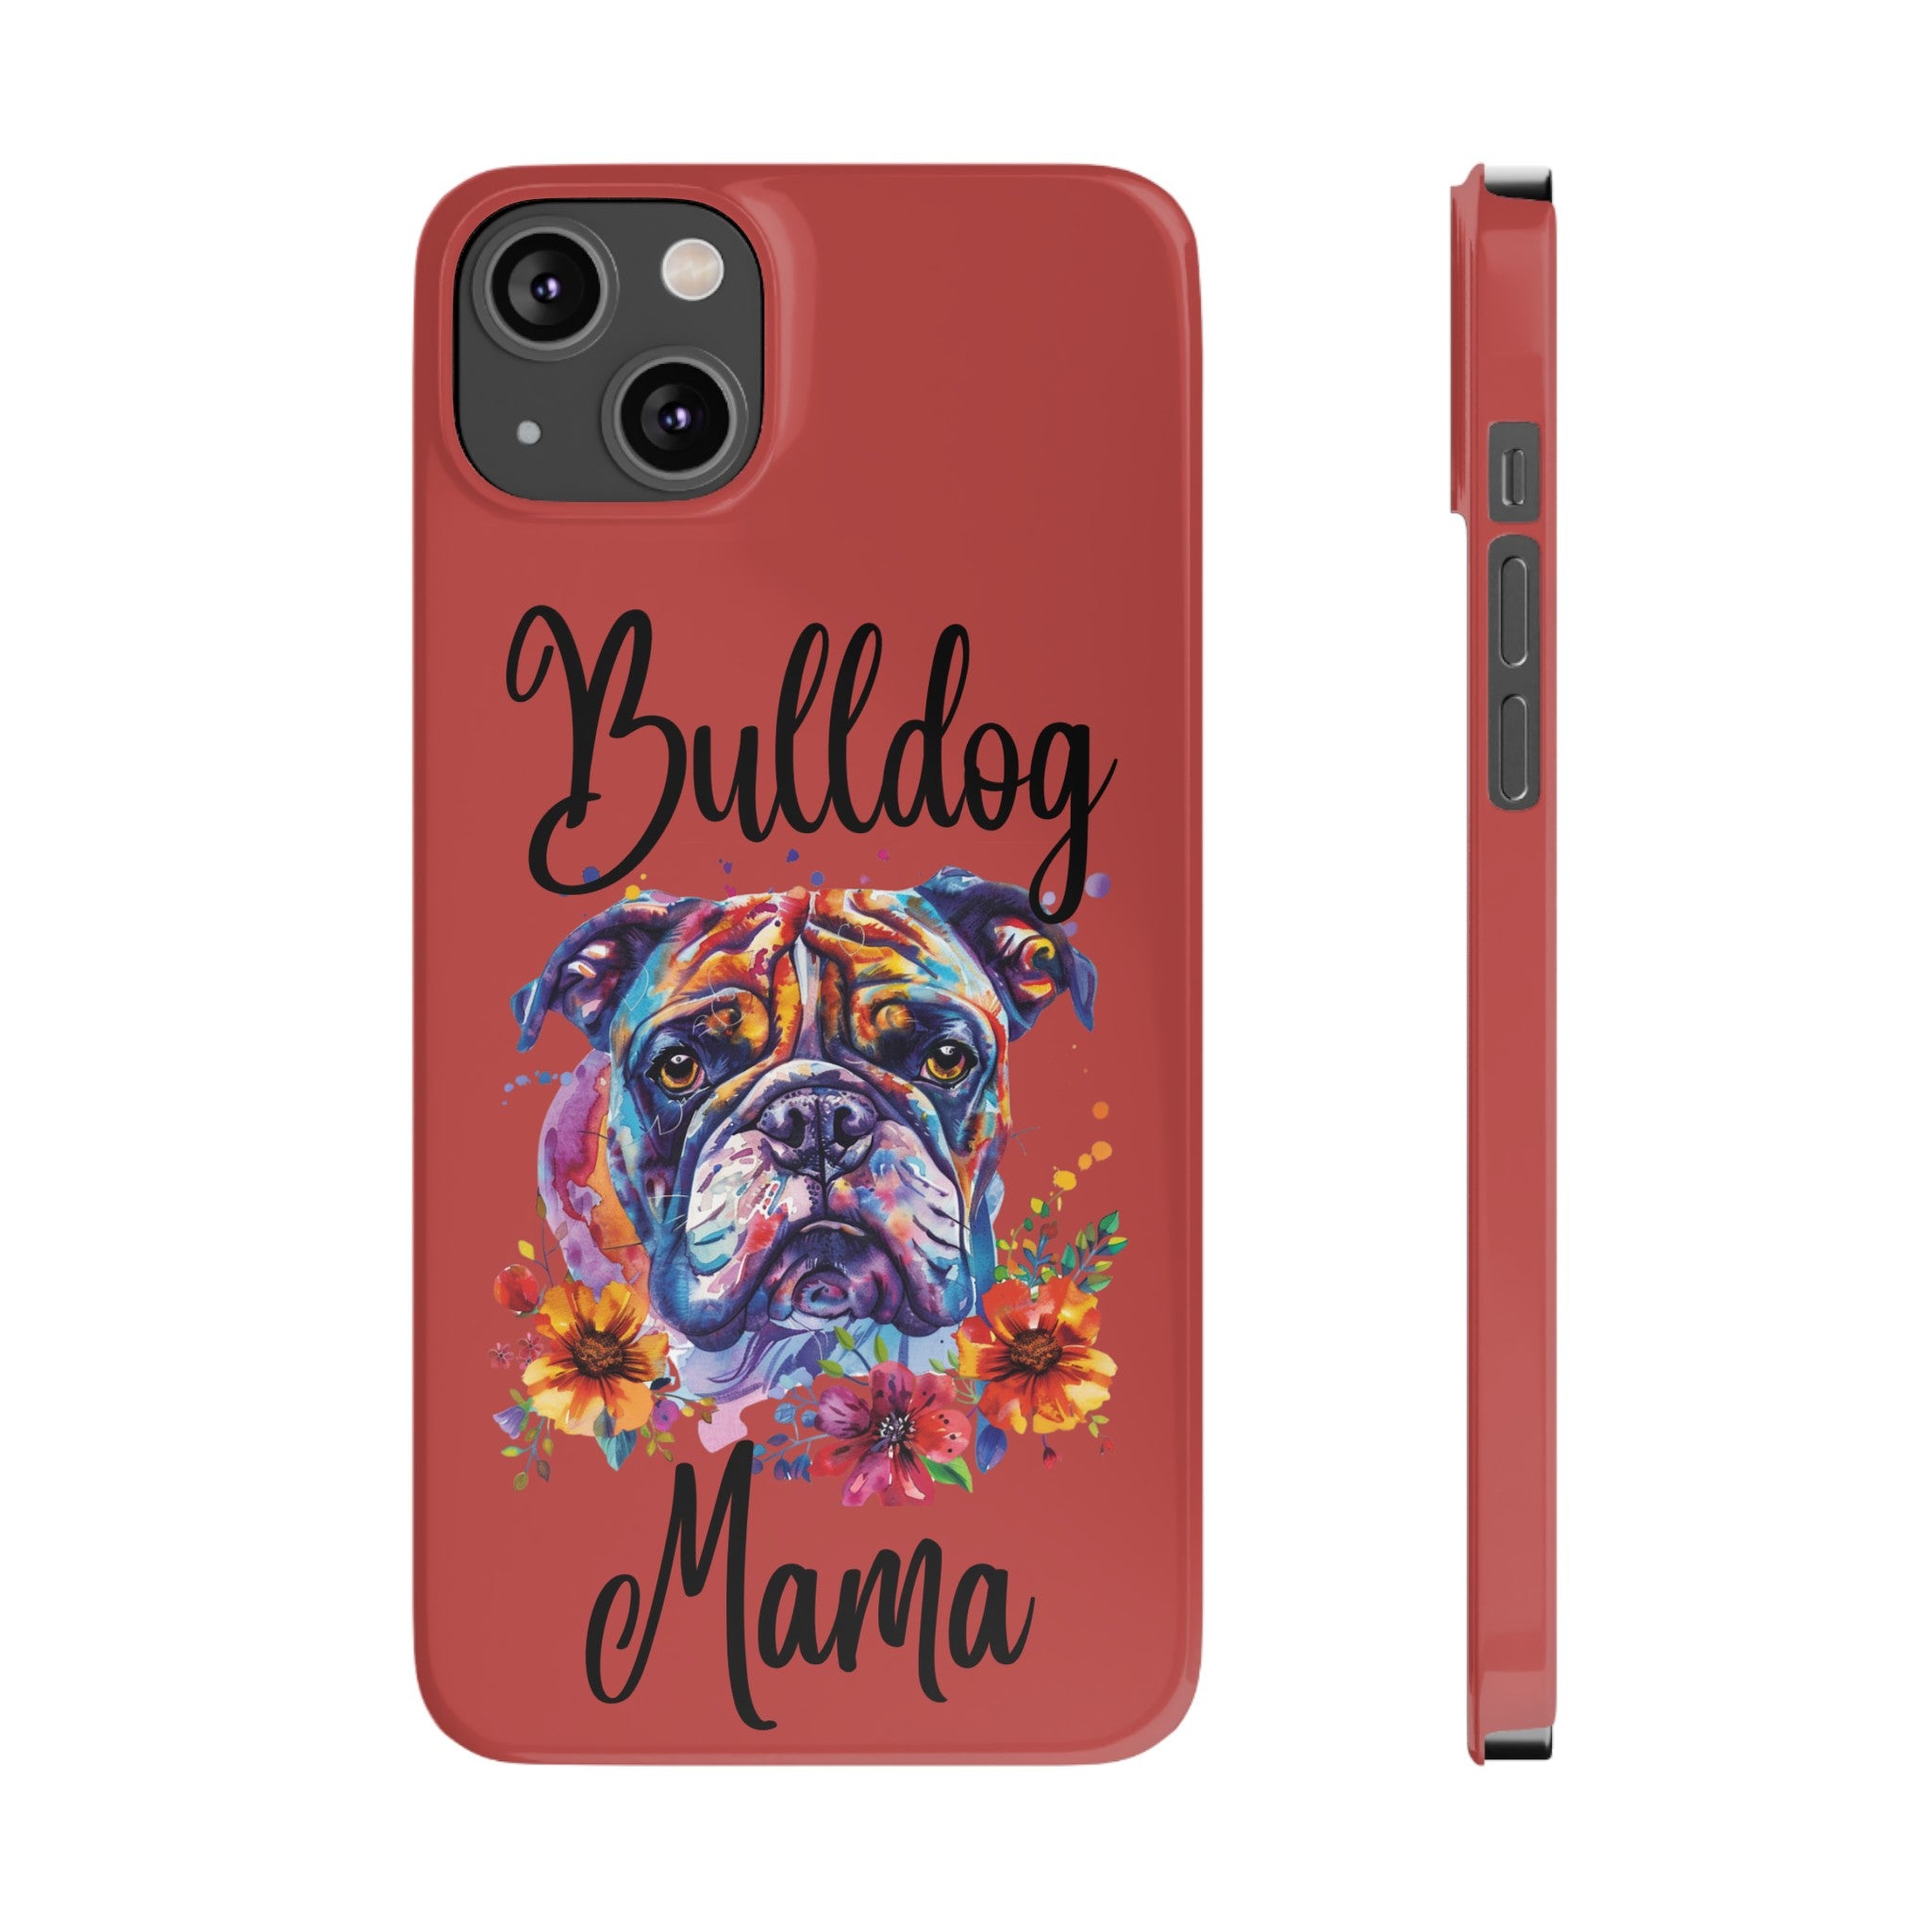 Bulldog iPhone Cases (Engish/Watercolor)